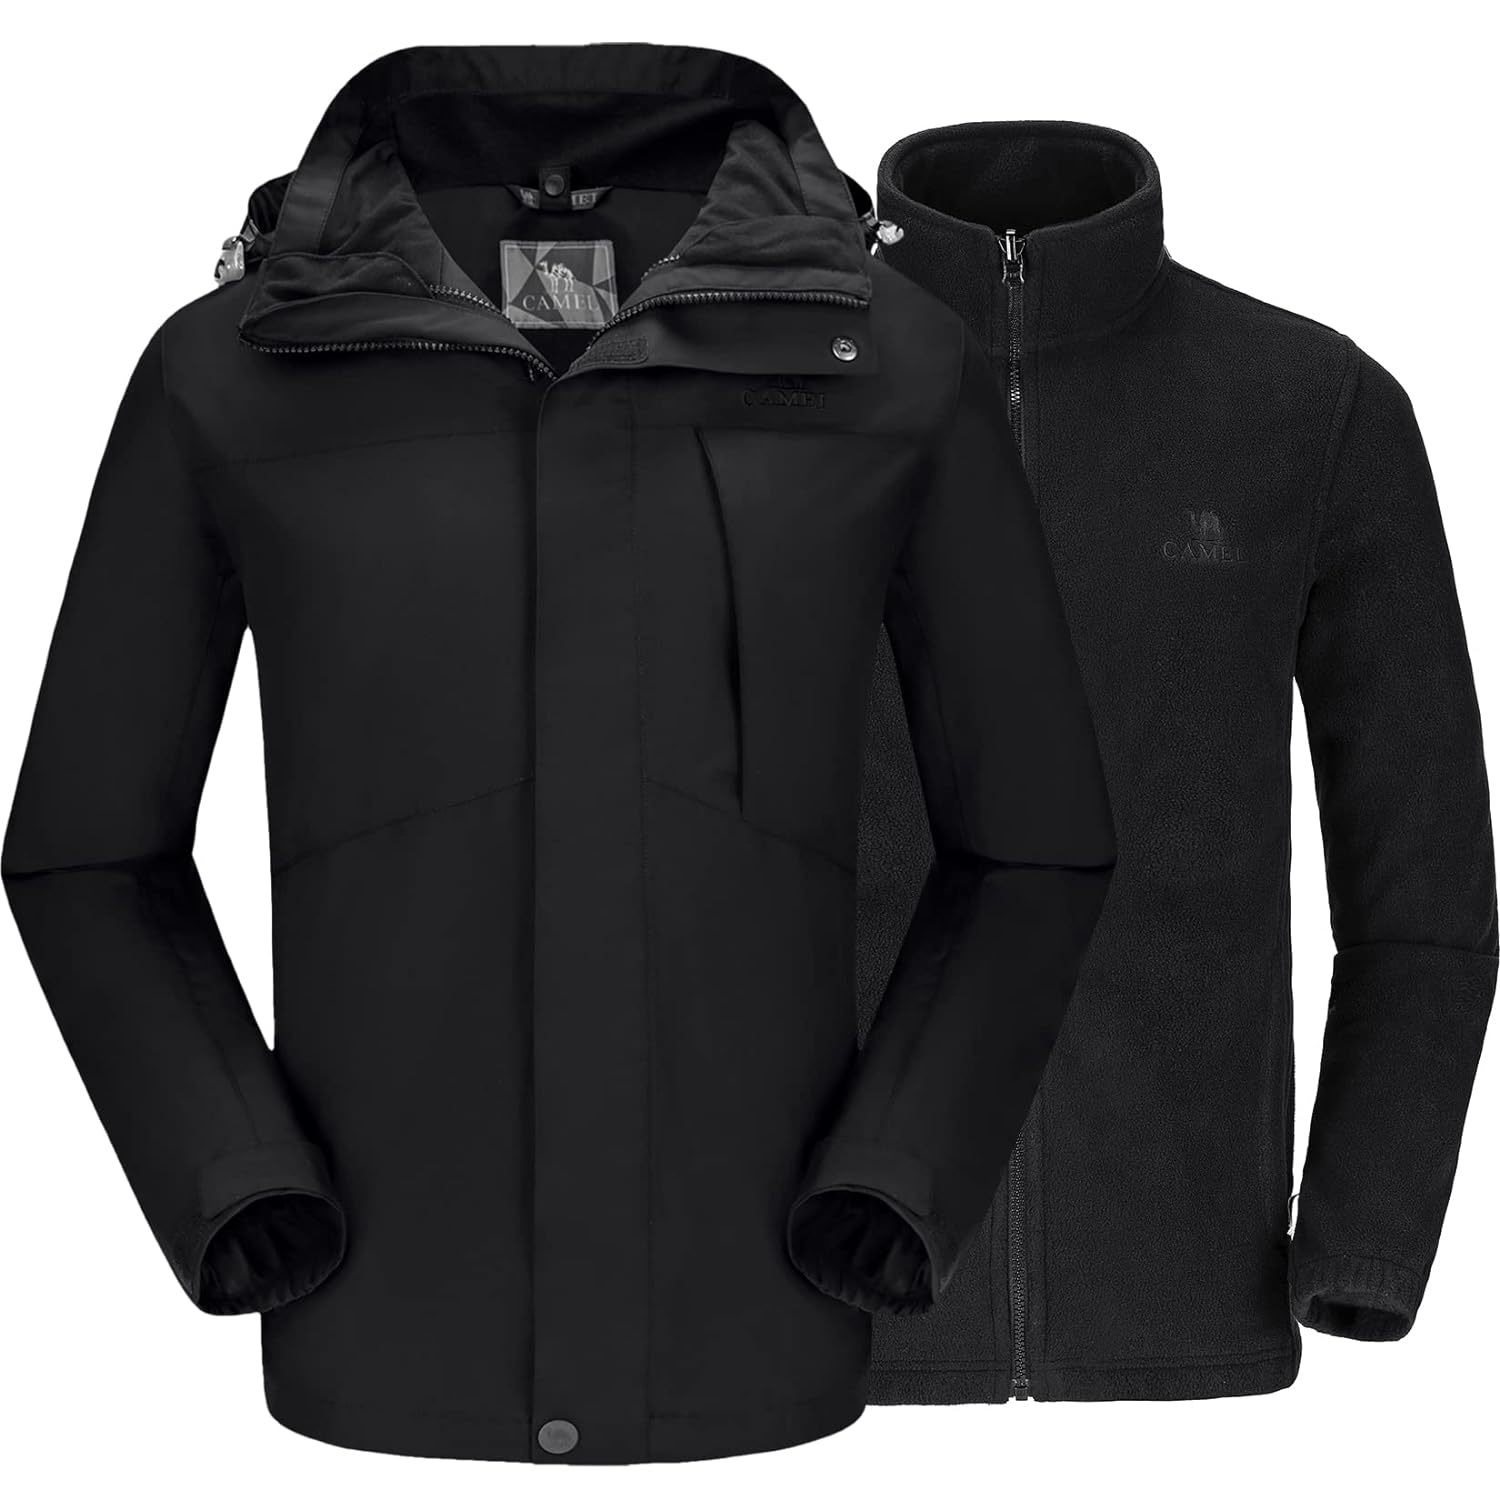 CAMELSPORTS Men's Mountain Ski Jacket 3 in 1 Waterproof Winter Jacket Warm Snow Jacket Hooded Rain Coat Windproof Winter Coat Black